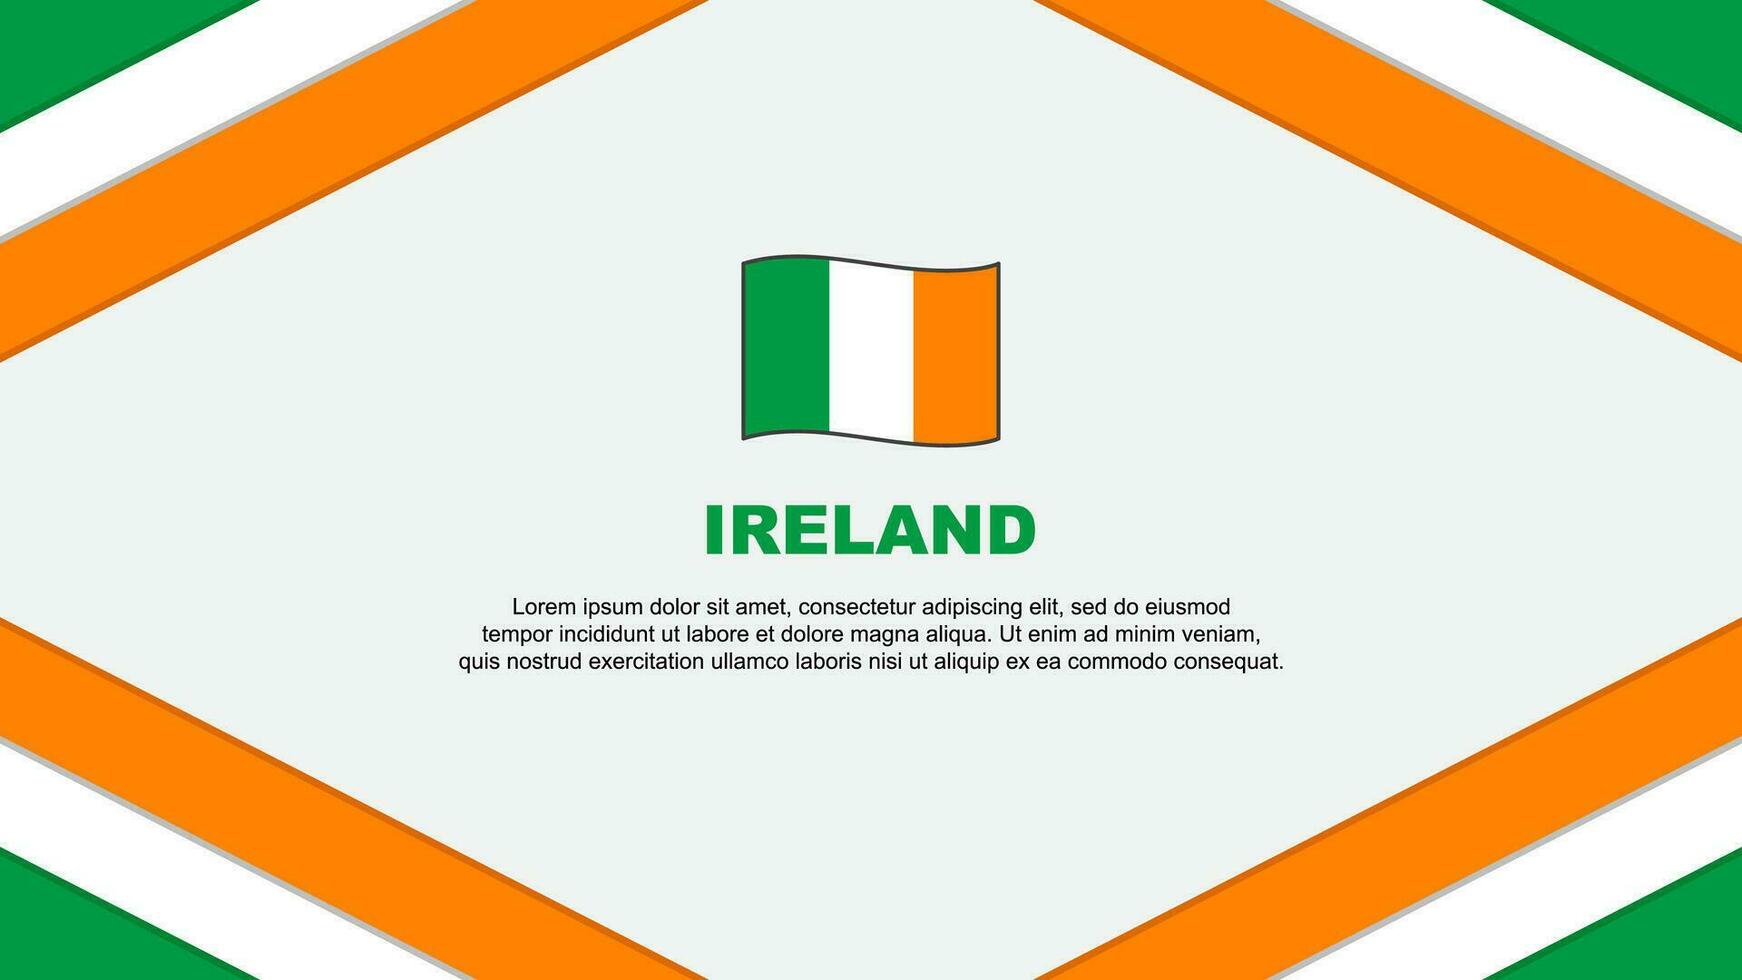 Ireland Flag Abstract Background Design Template. Ireland Independence Day Banner Cartoon Vector Illustration. Ireland Template